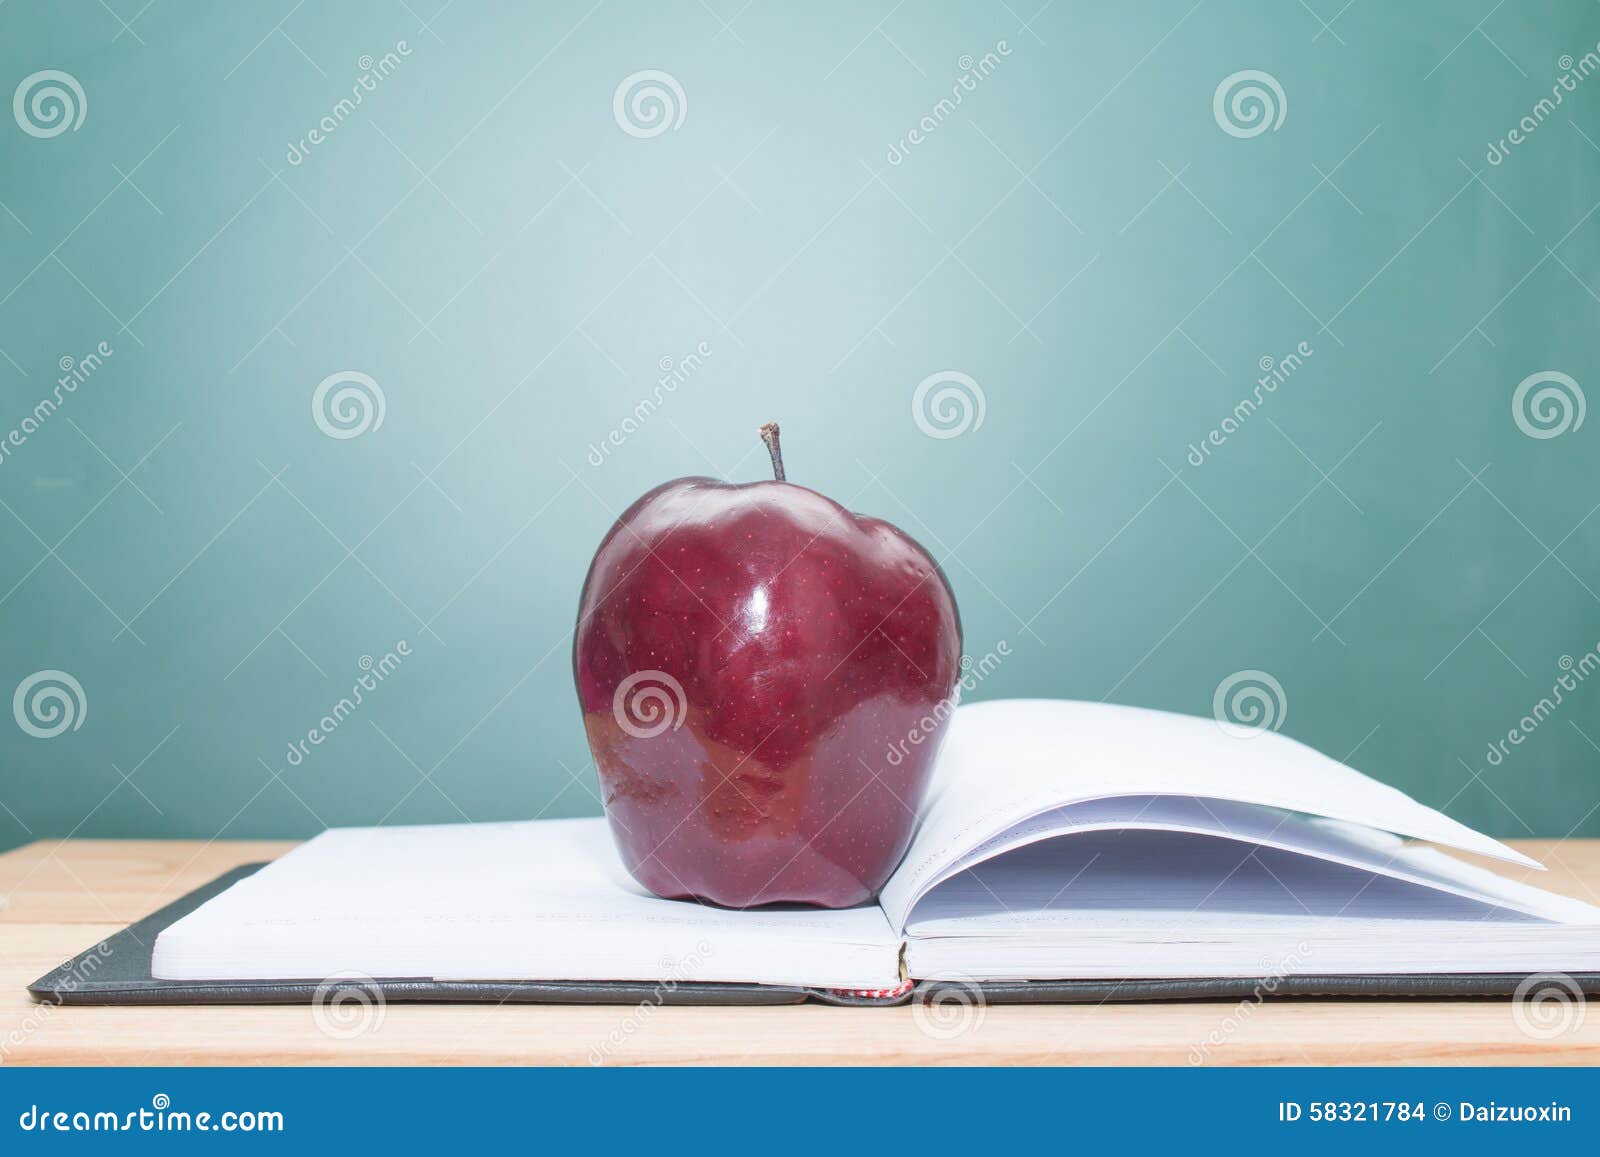 Apple on books stock photo. Image of books, education - 58321784